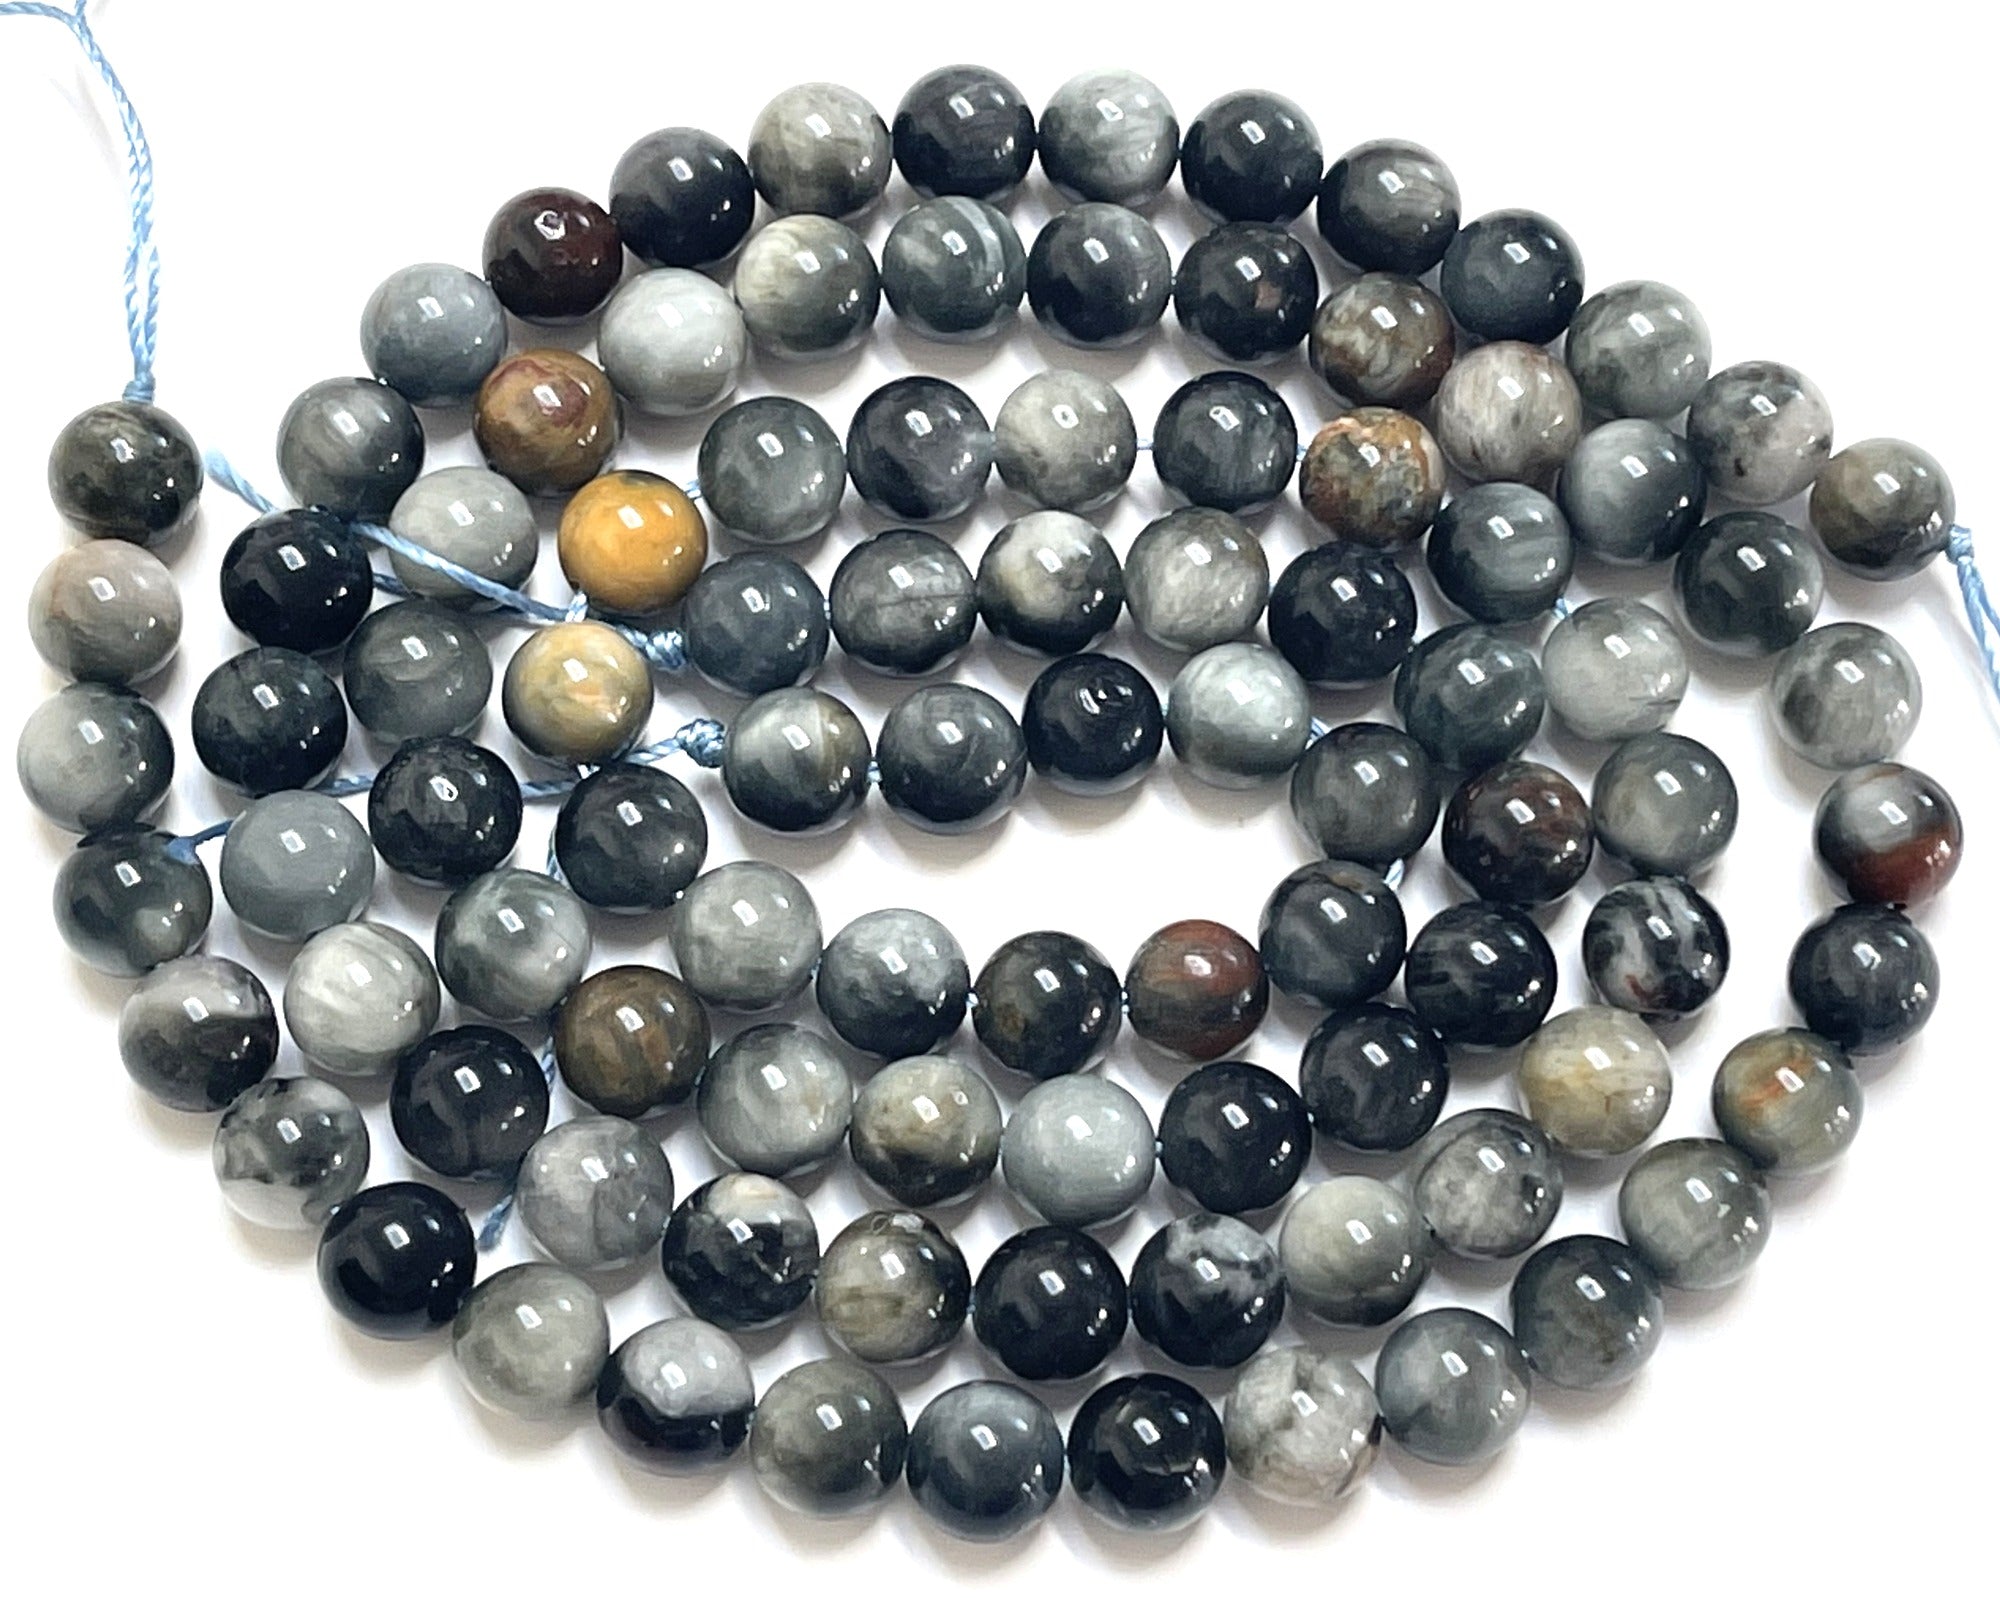 Eagle Eye 8mm round natural gemstone beads 15.5" strand